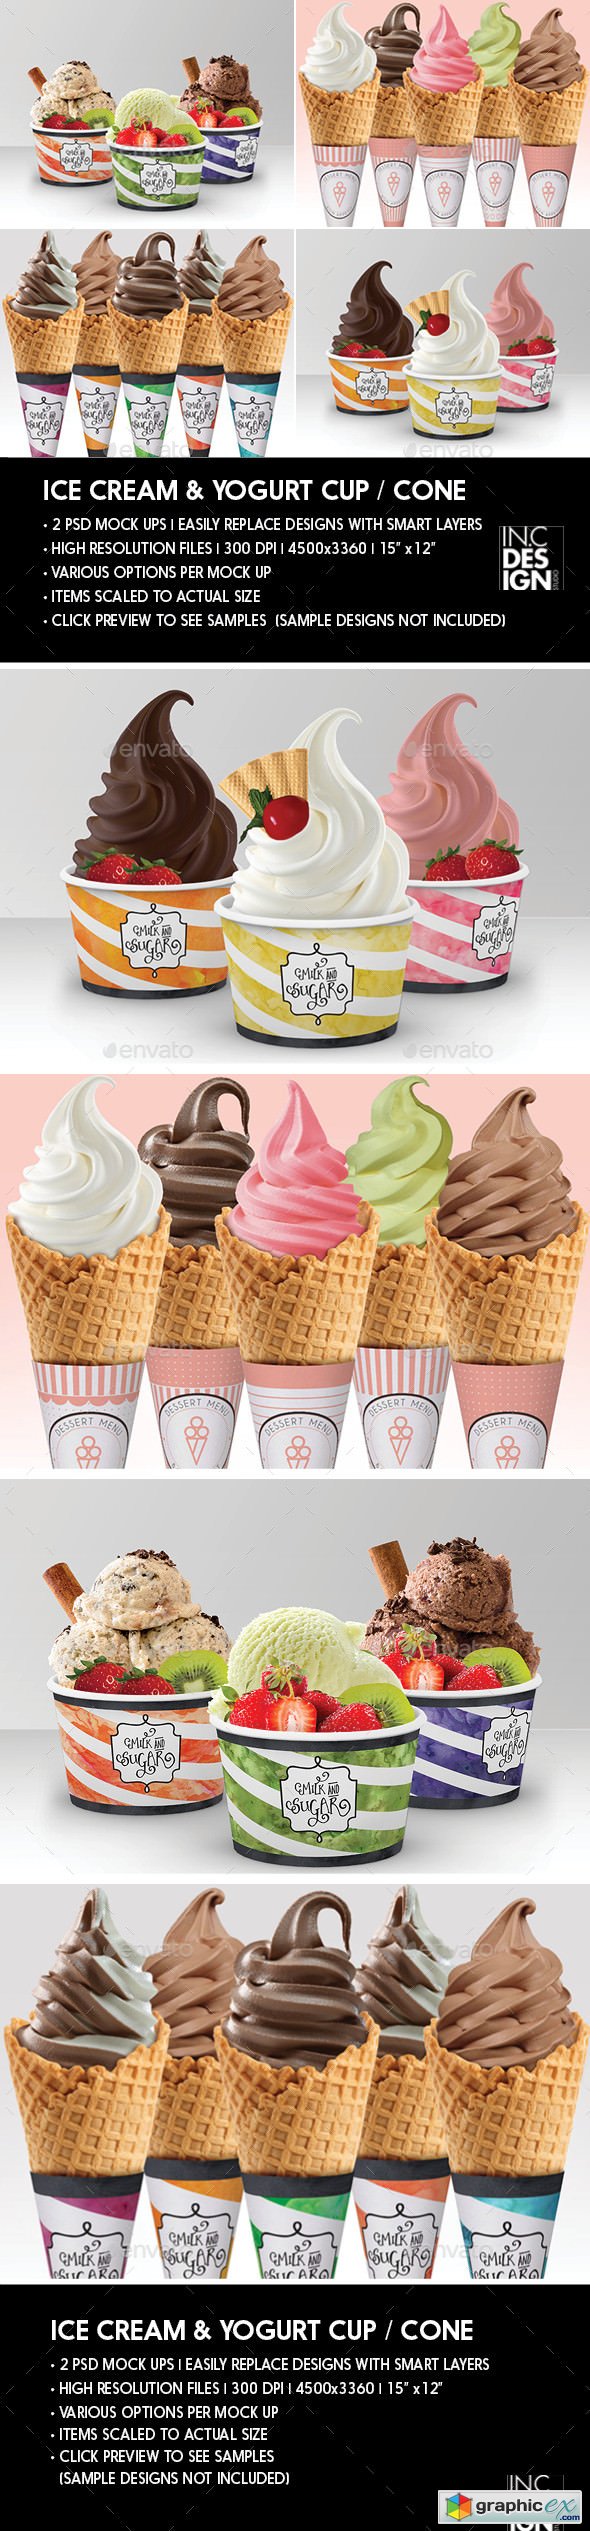 Packaging Mock Up Ice Cream / Yogurt Cup / Cone » Free Download Vector ...